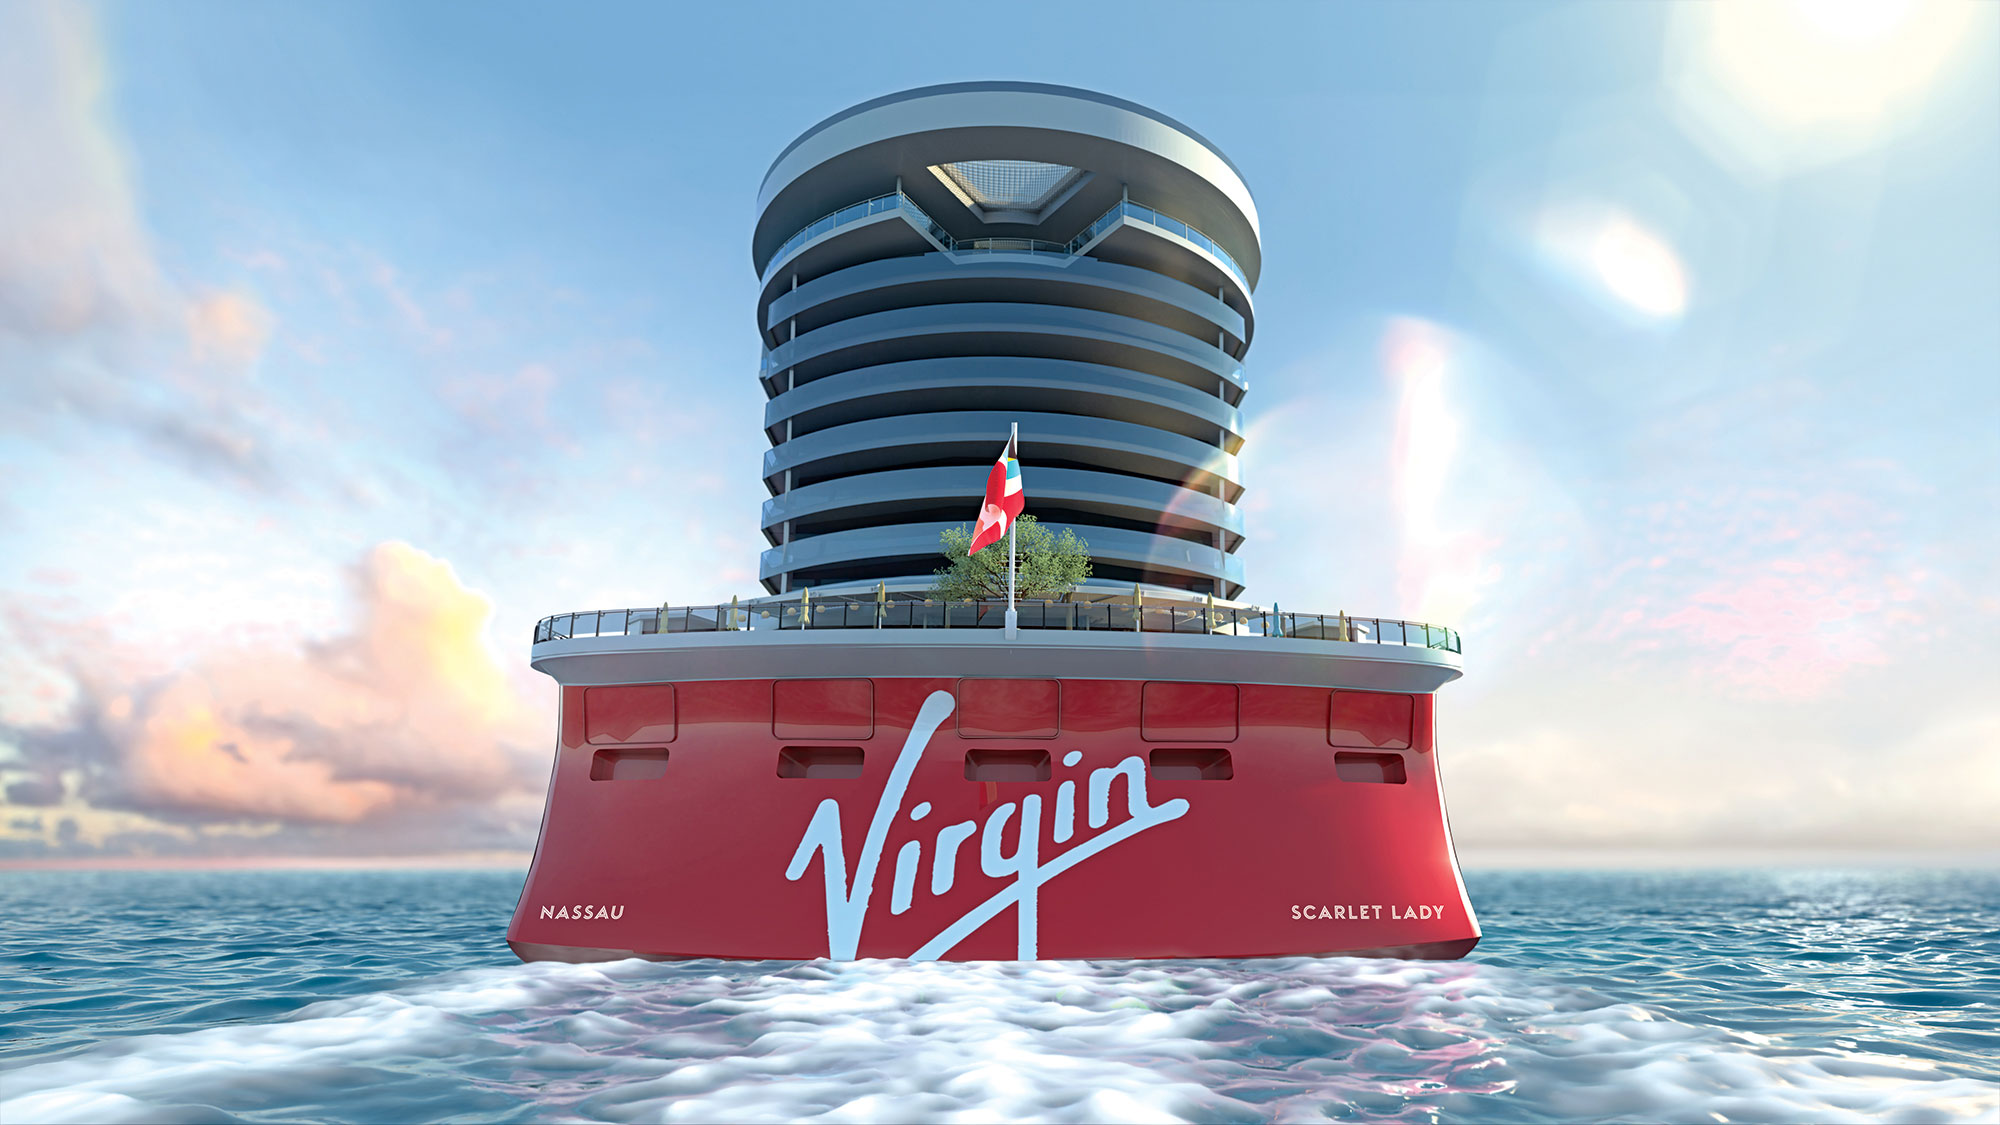 branson virgin cruises